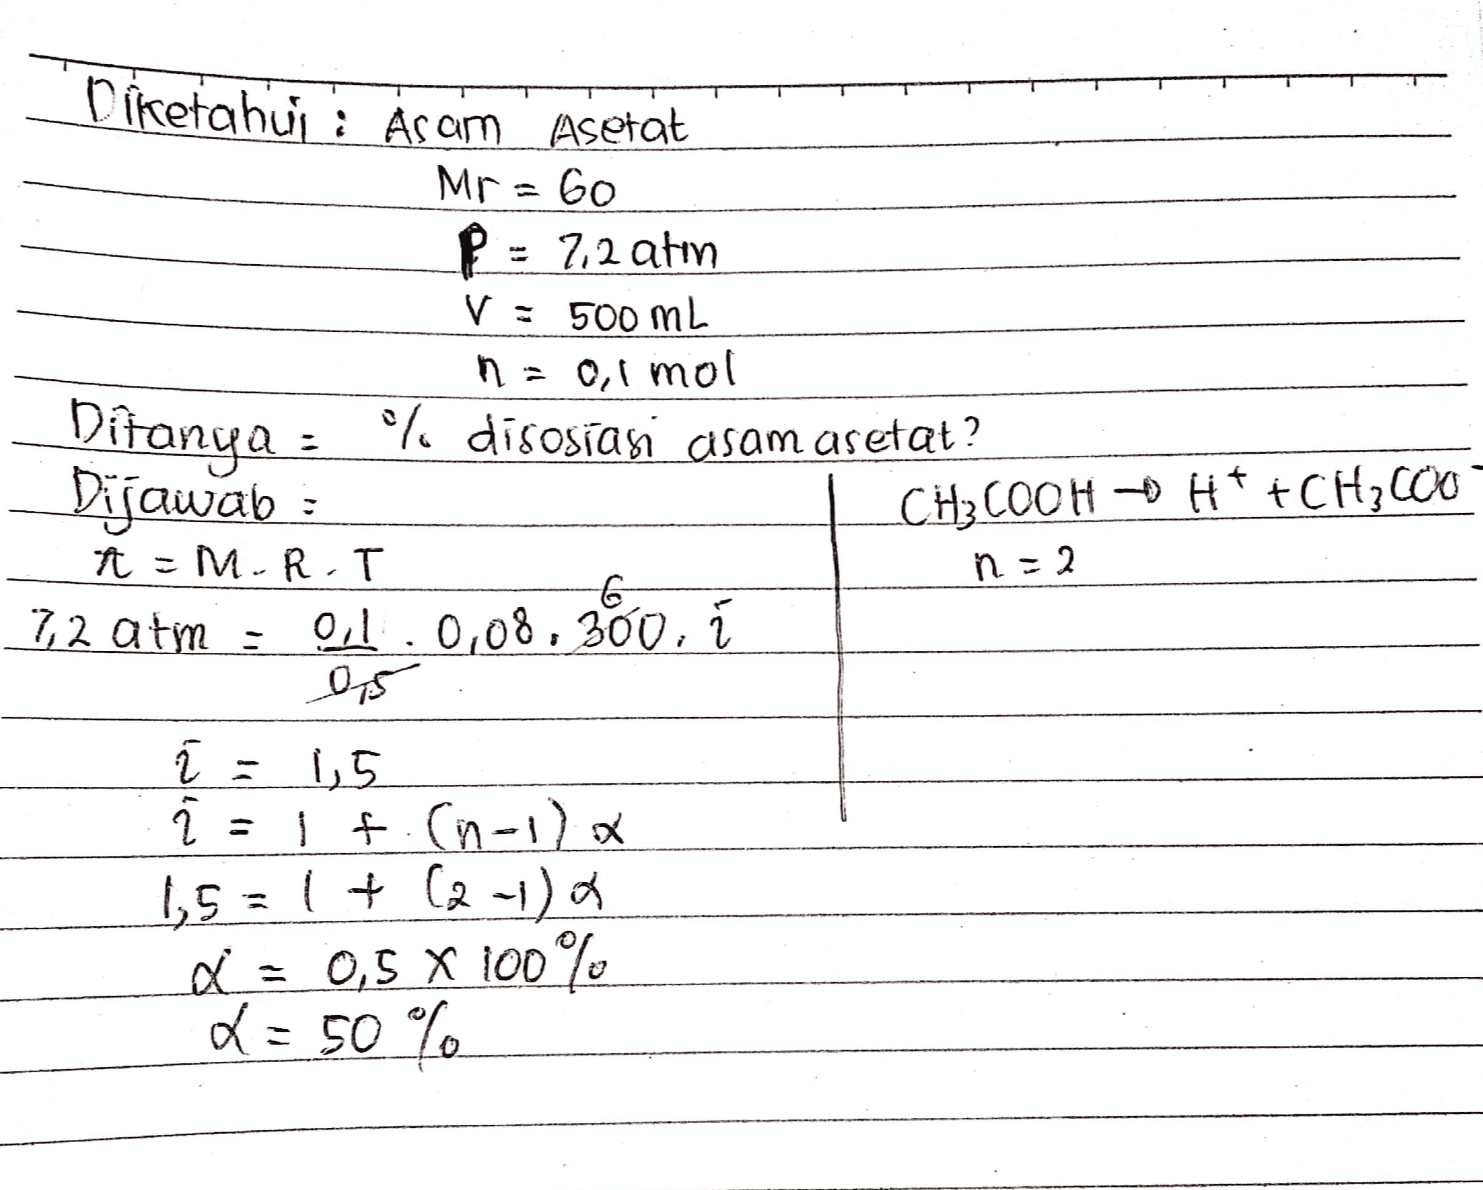 Diketahui : Asam Asetat Mr = 60 P = 7,2 atin V = 500 ml n = 0,1 mol Ditanya : *% disosiasi asam asetat ? Dijawab : CH3COOH + H+ +CH 600 -MRT 7,2 atm : 01.0,08,360, i n = 2 1,5 2 T = . If an-l) a 1,5=1+ (2-1) a Q = 0,5 X 100% L = 50% 